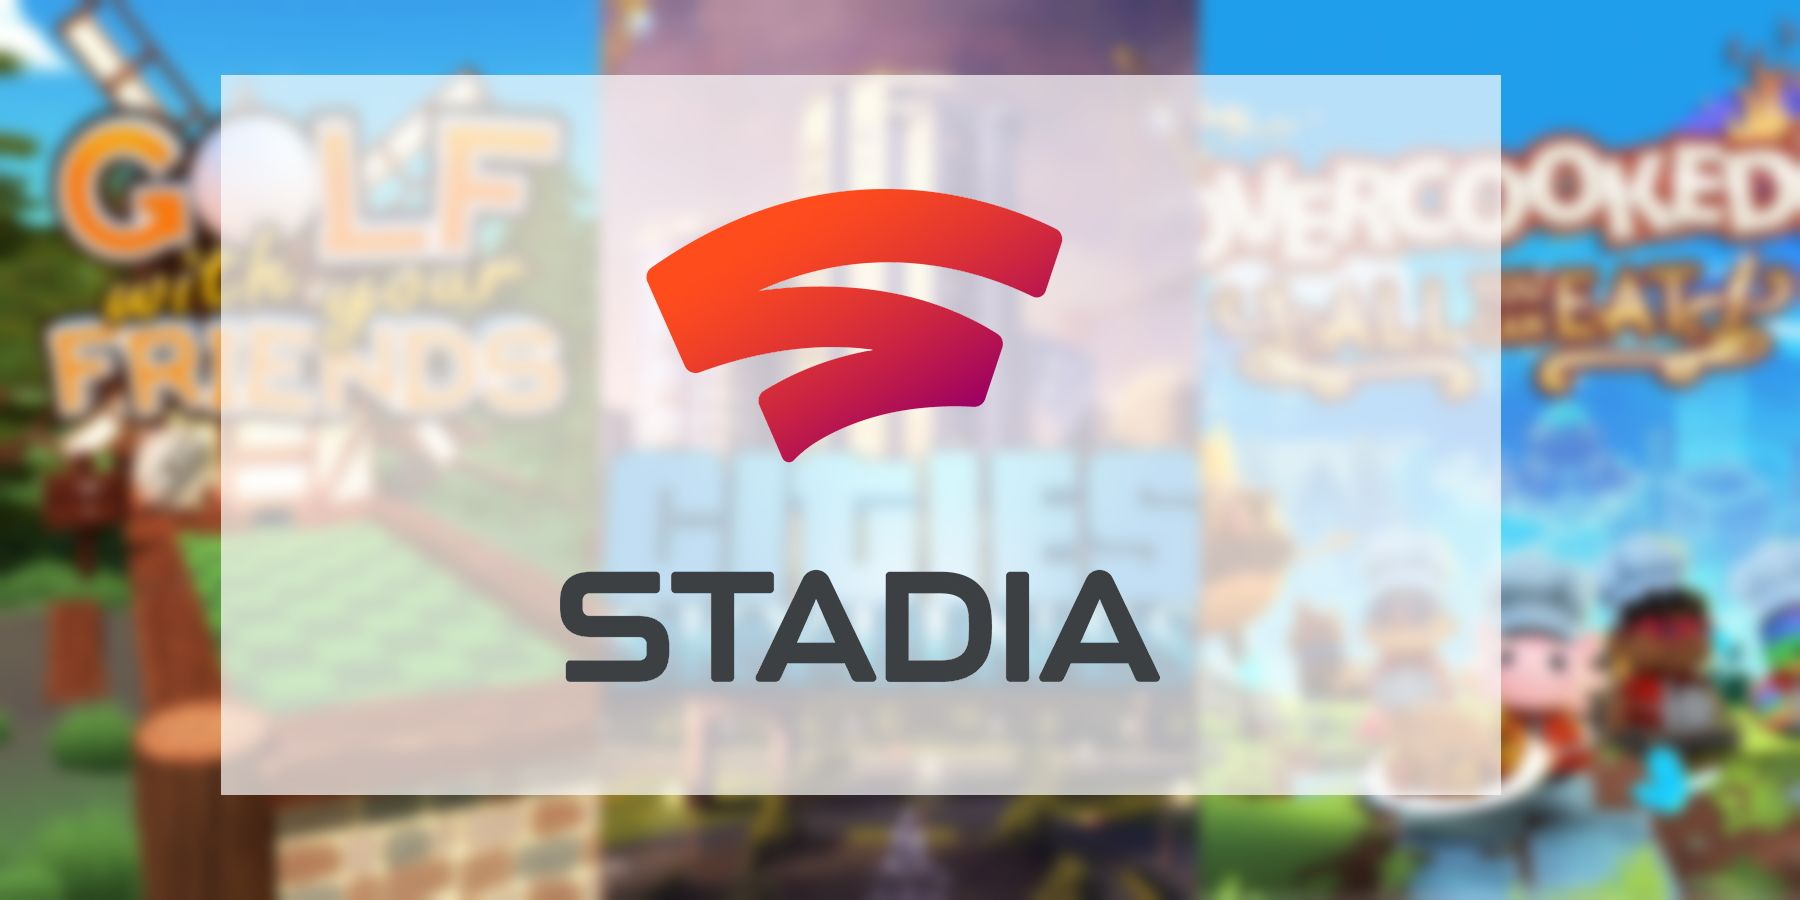 stadia-new-games-team17-paradox-interactive